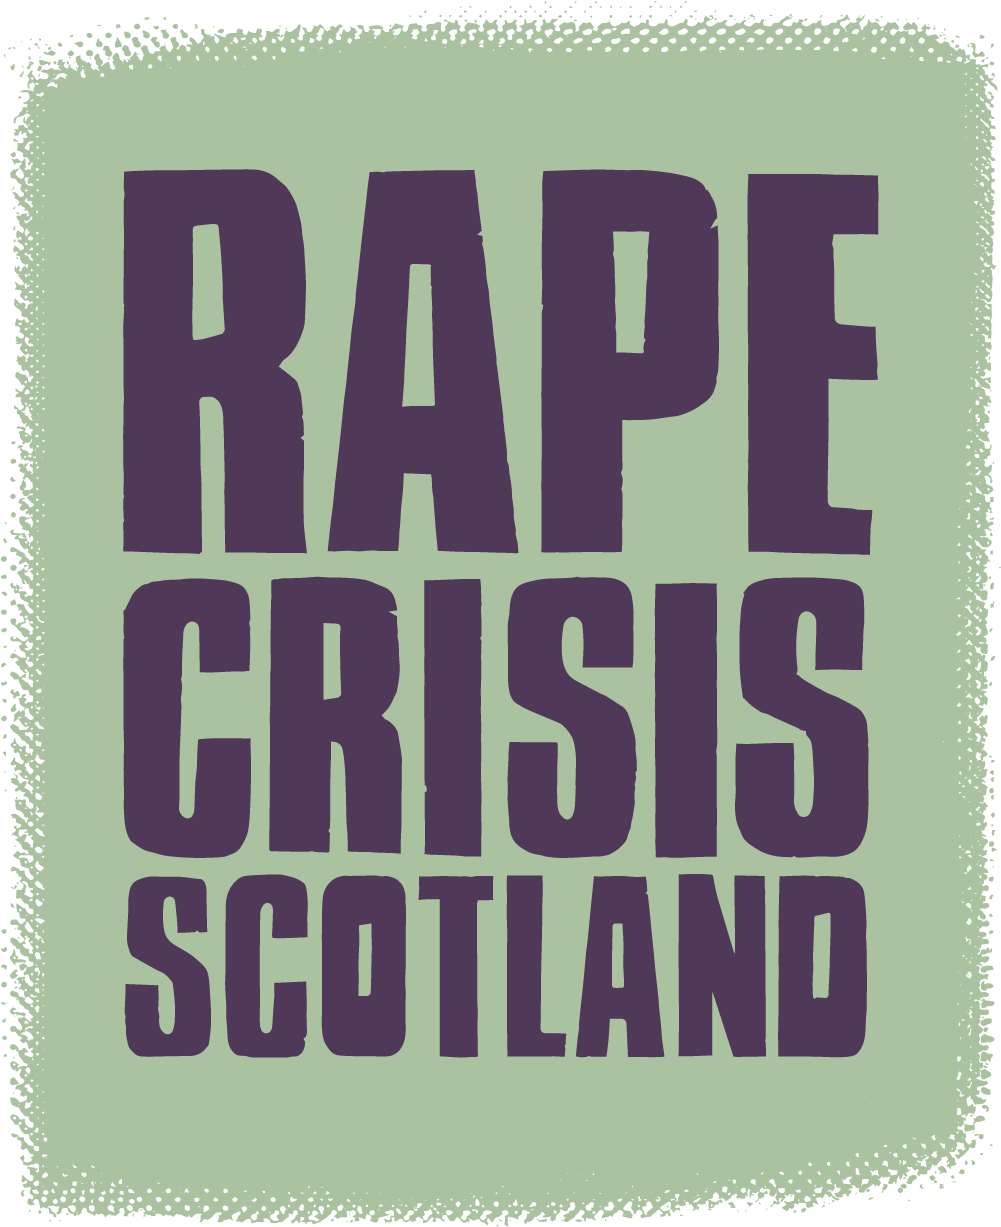 Rape Crisis Scotland